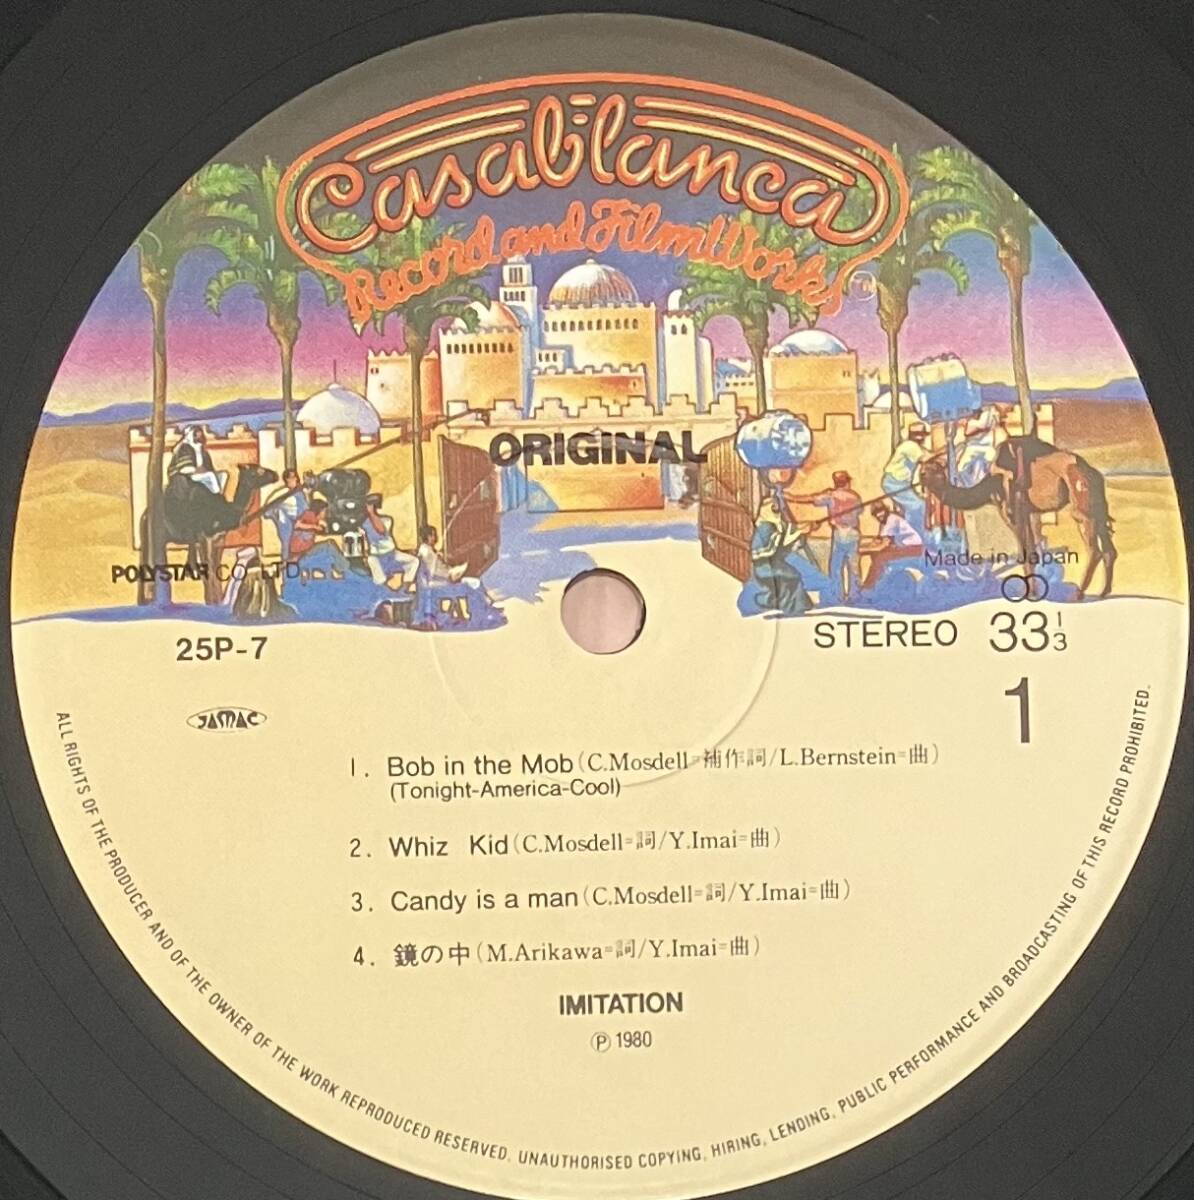 [ LP / レコード ] Imitation / Original ( New Wave / Rock ) Casablanca - 25P-7 ニューウェーブ ロック サディスティック・ミカ・バンド_画像3